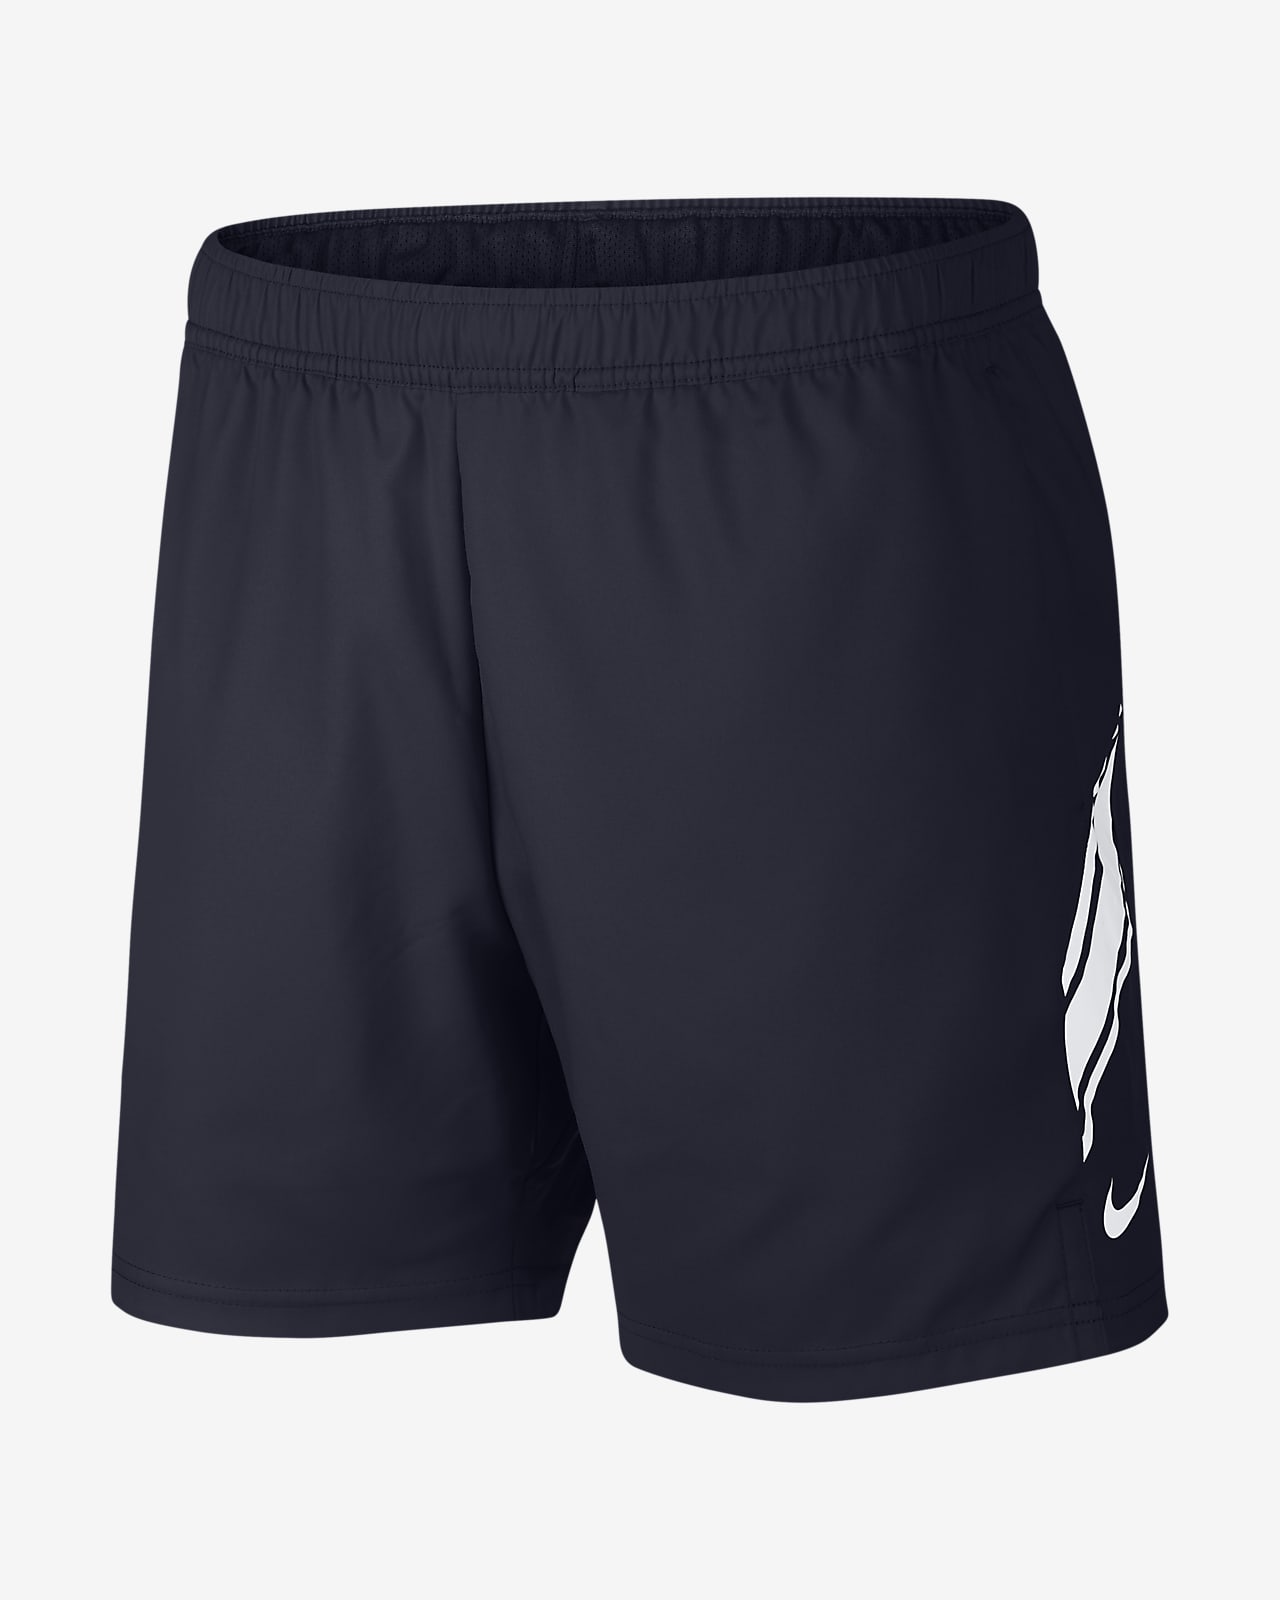 NikeCourt Dri-FIT Men's 18cm approx. Tennis Shorts